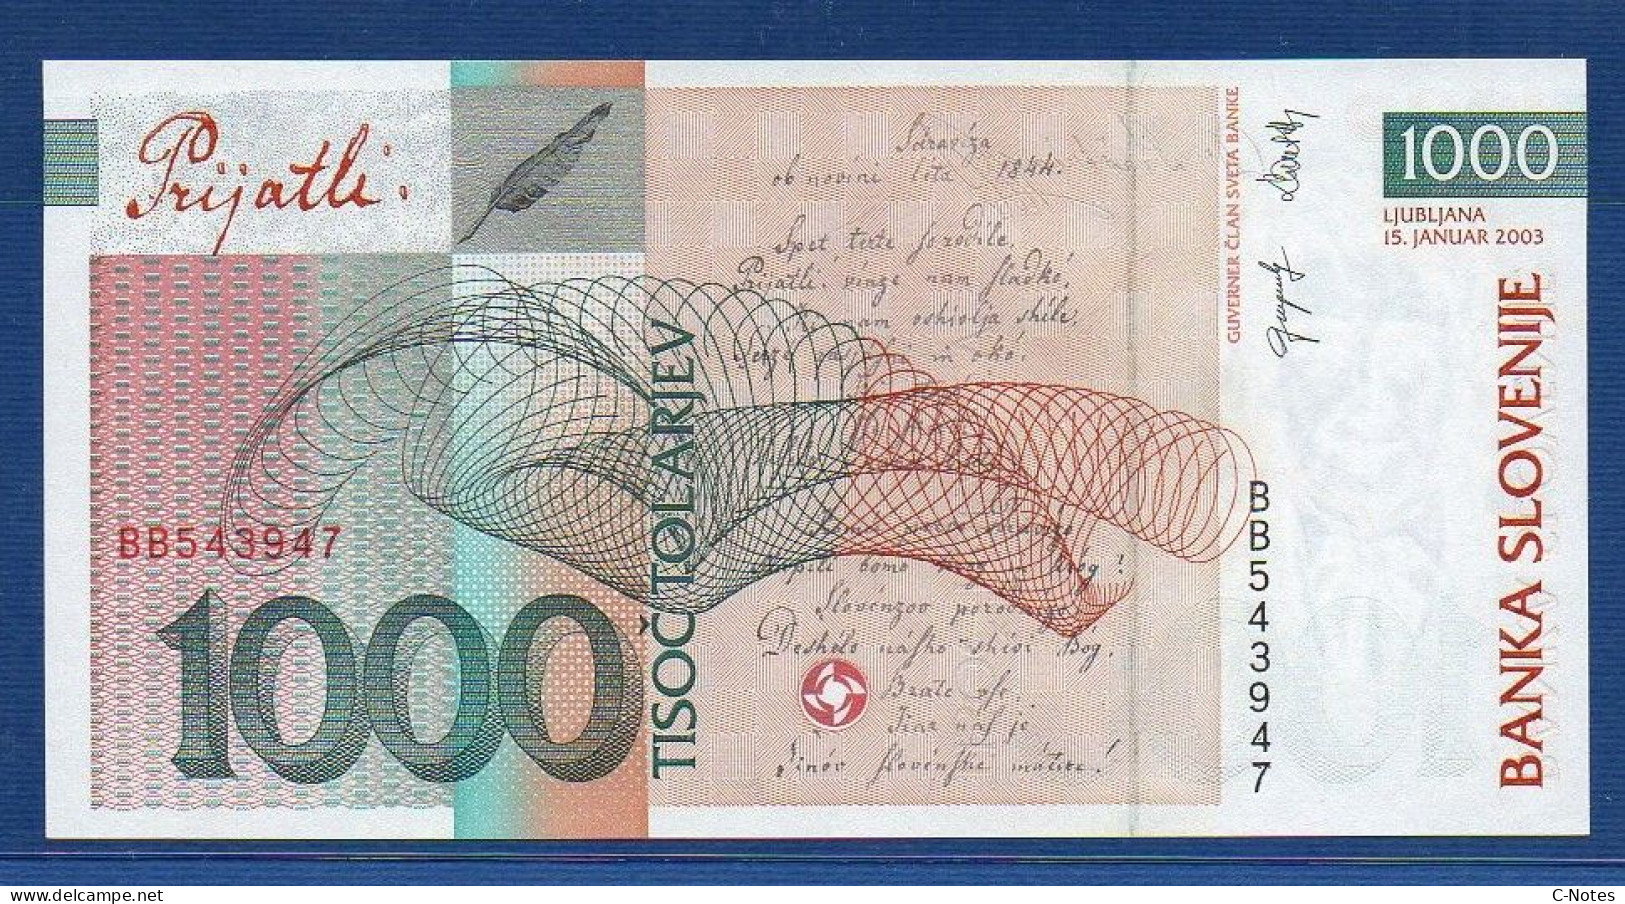 SLOVENIA - P.29 – 1000 Tolarjev 2004 UNC, S/n BB543947 "EU Entry" Commemorative Issue - Eslovenia